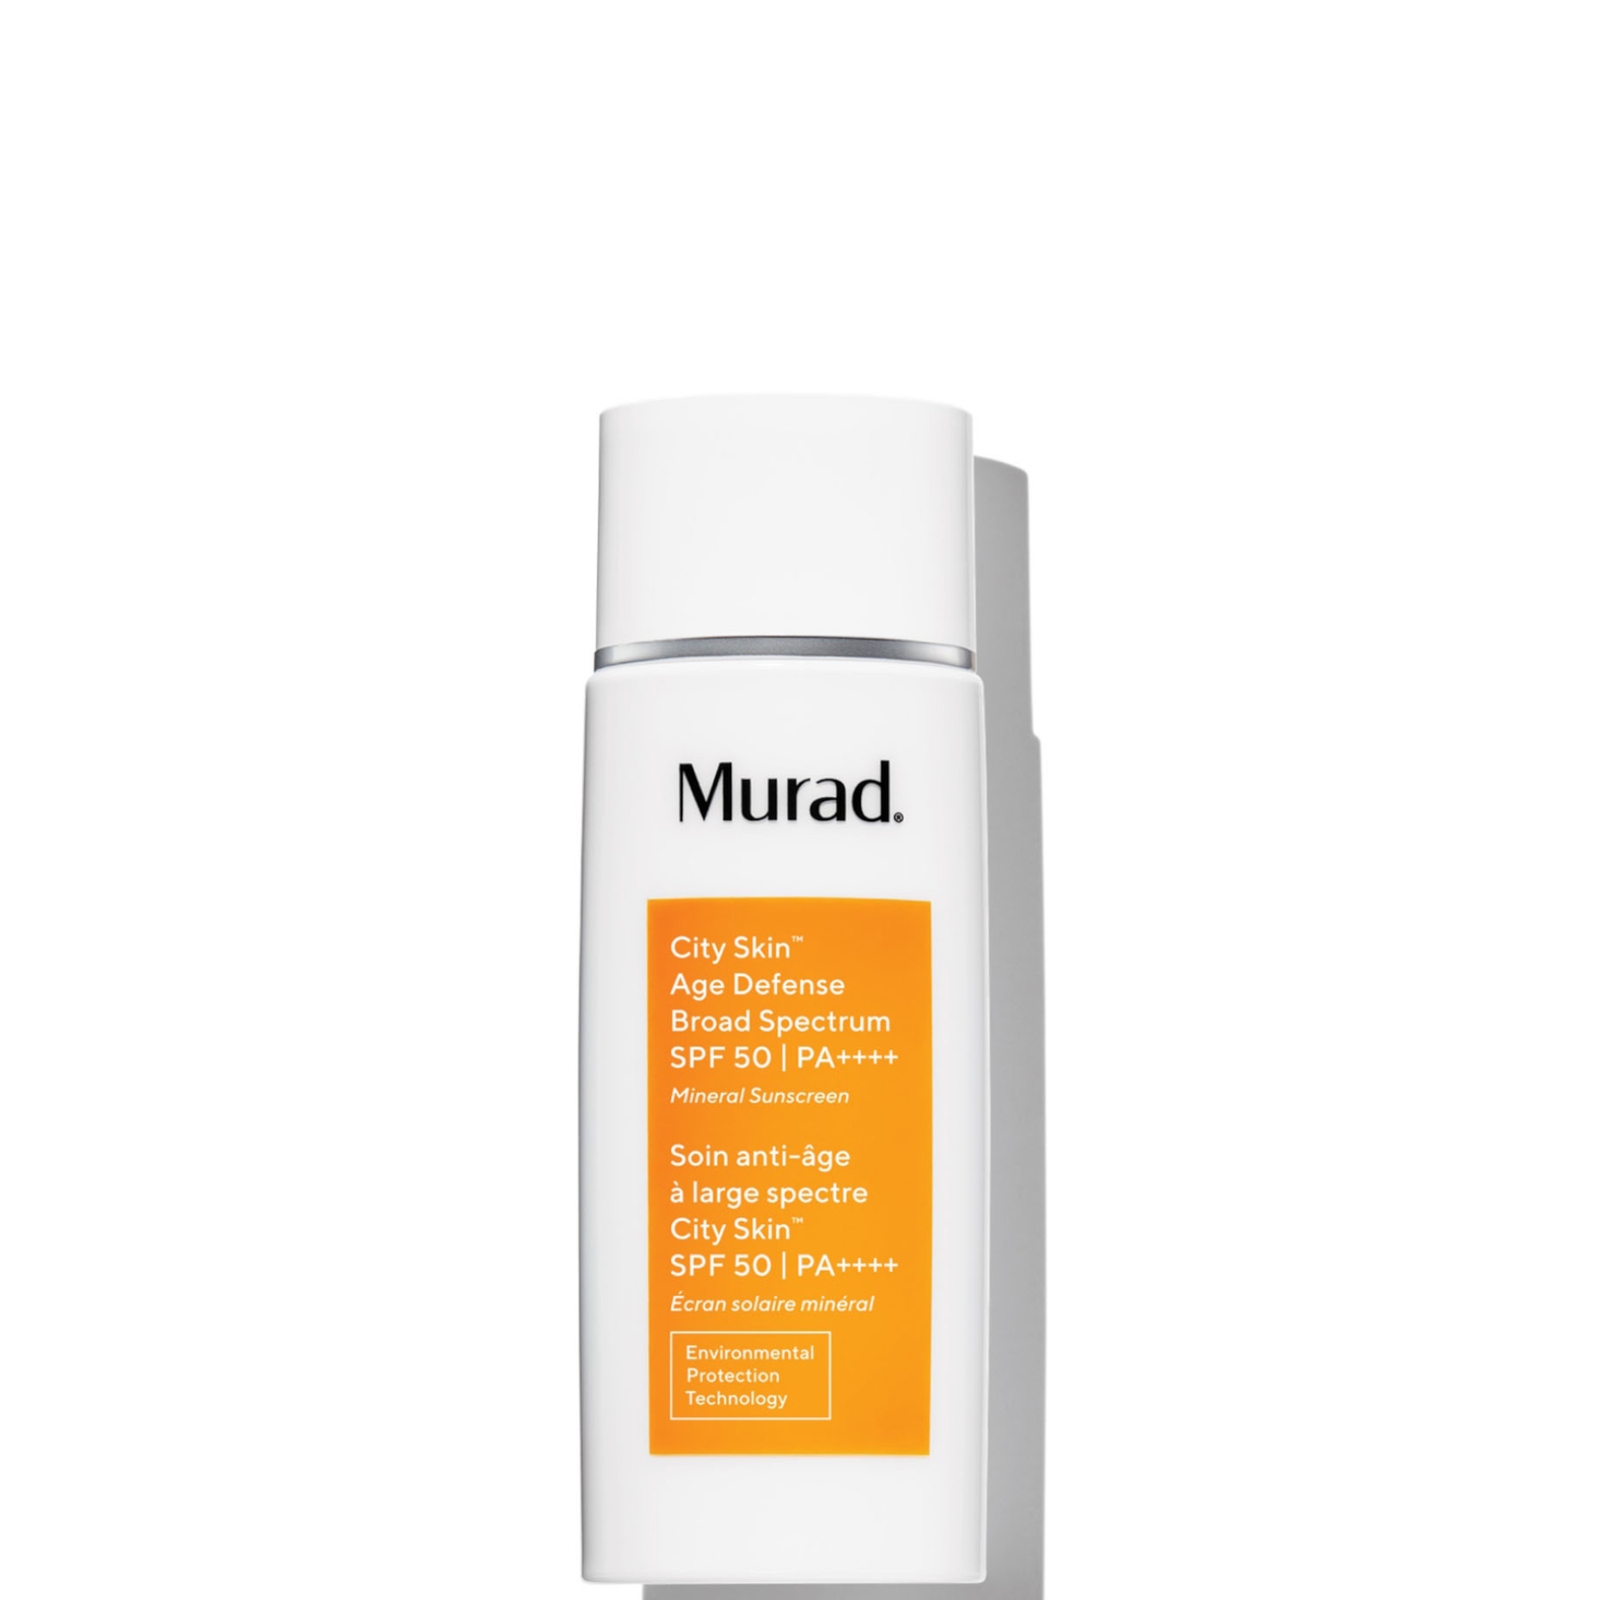 Protector solar de amplio espectro City Skin Age Defense Broad Spectrum SPF 50 PA ++++ de Murad